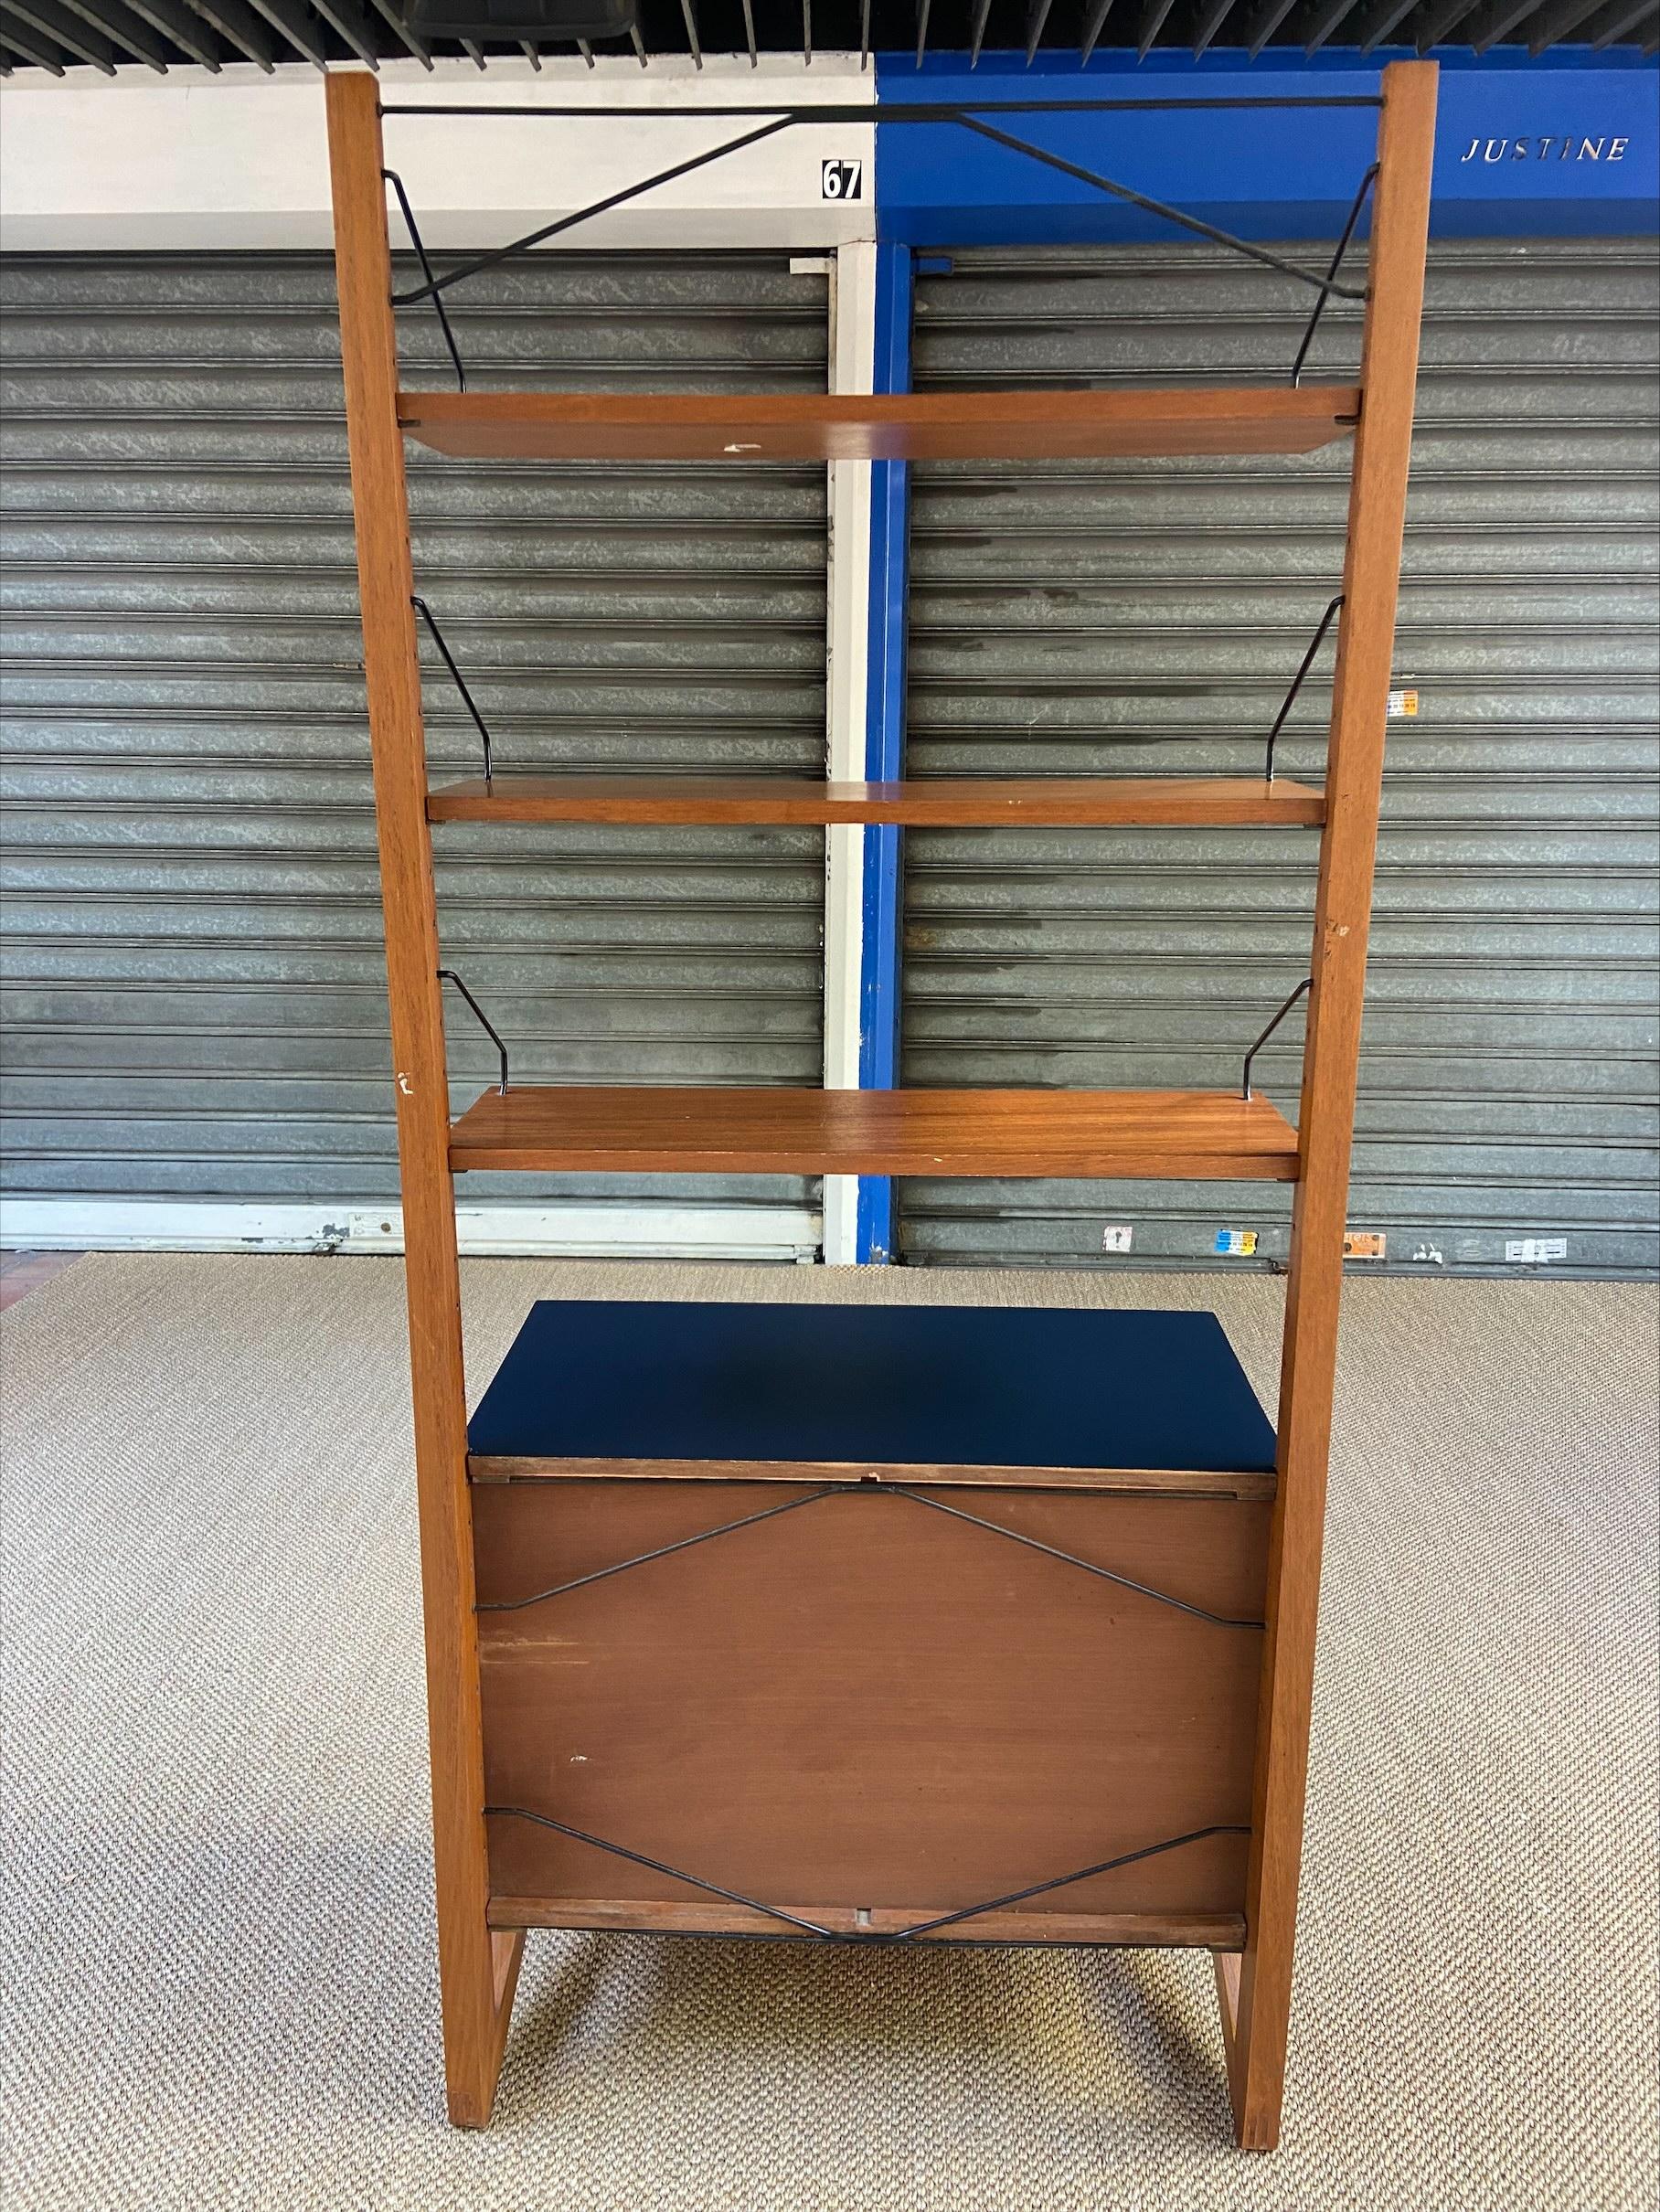 Shelf unit - Poul Cadovius - Circa 1968
Midnight blue teak and melamine

3 shelves

Measures: H 190 x L 84 x P 44.